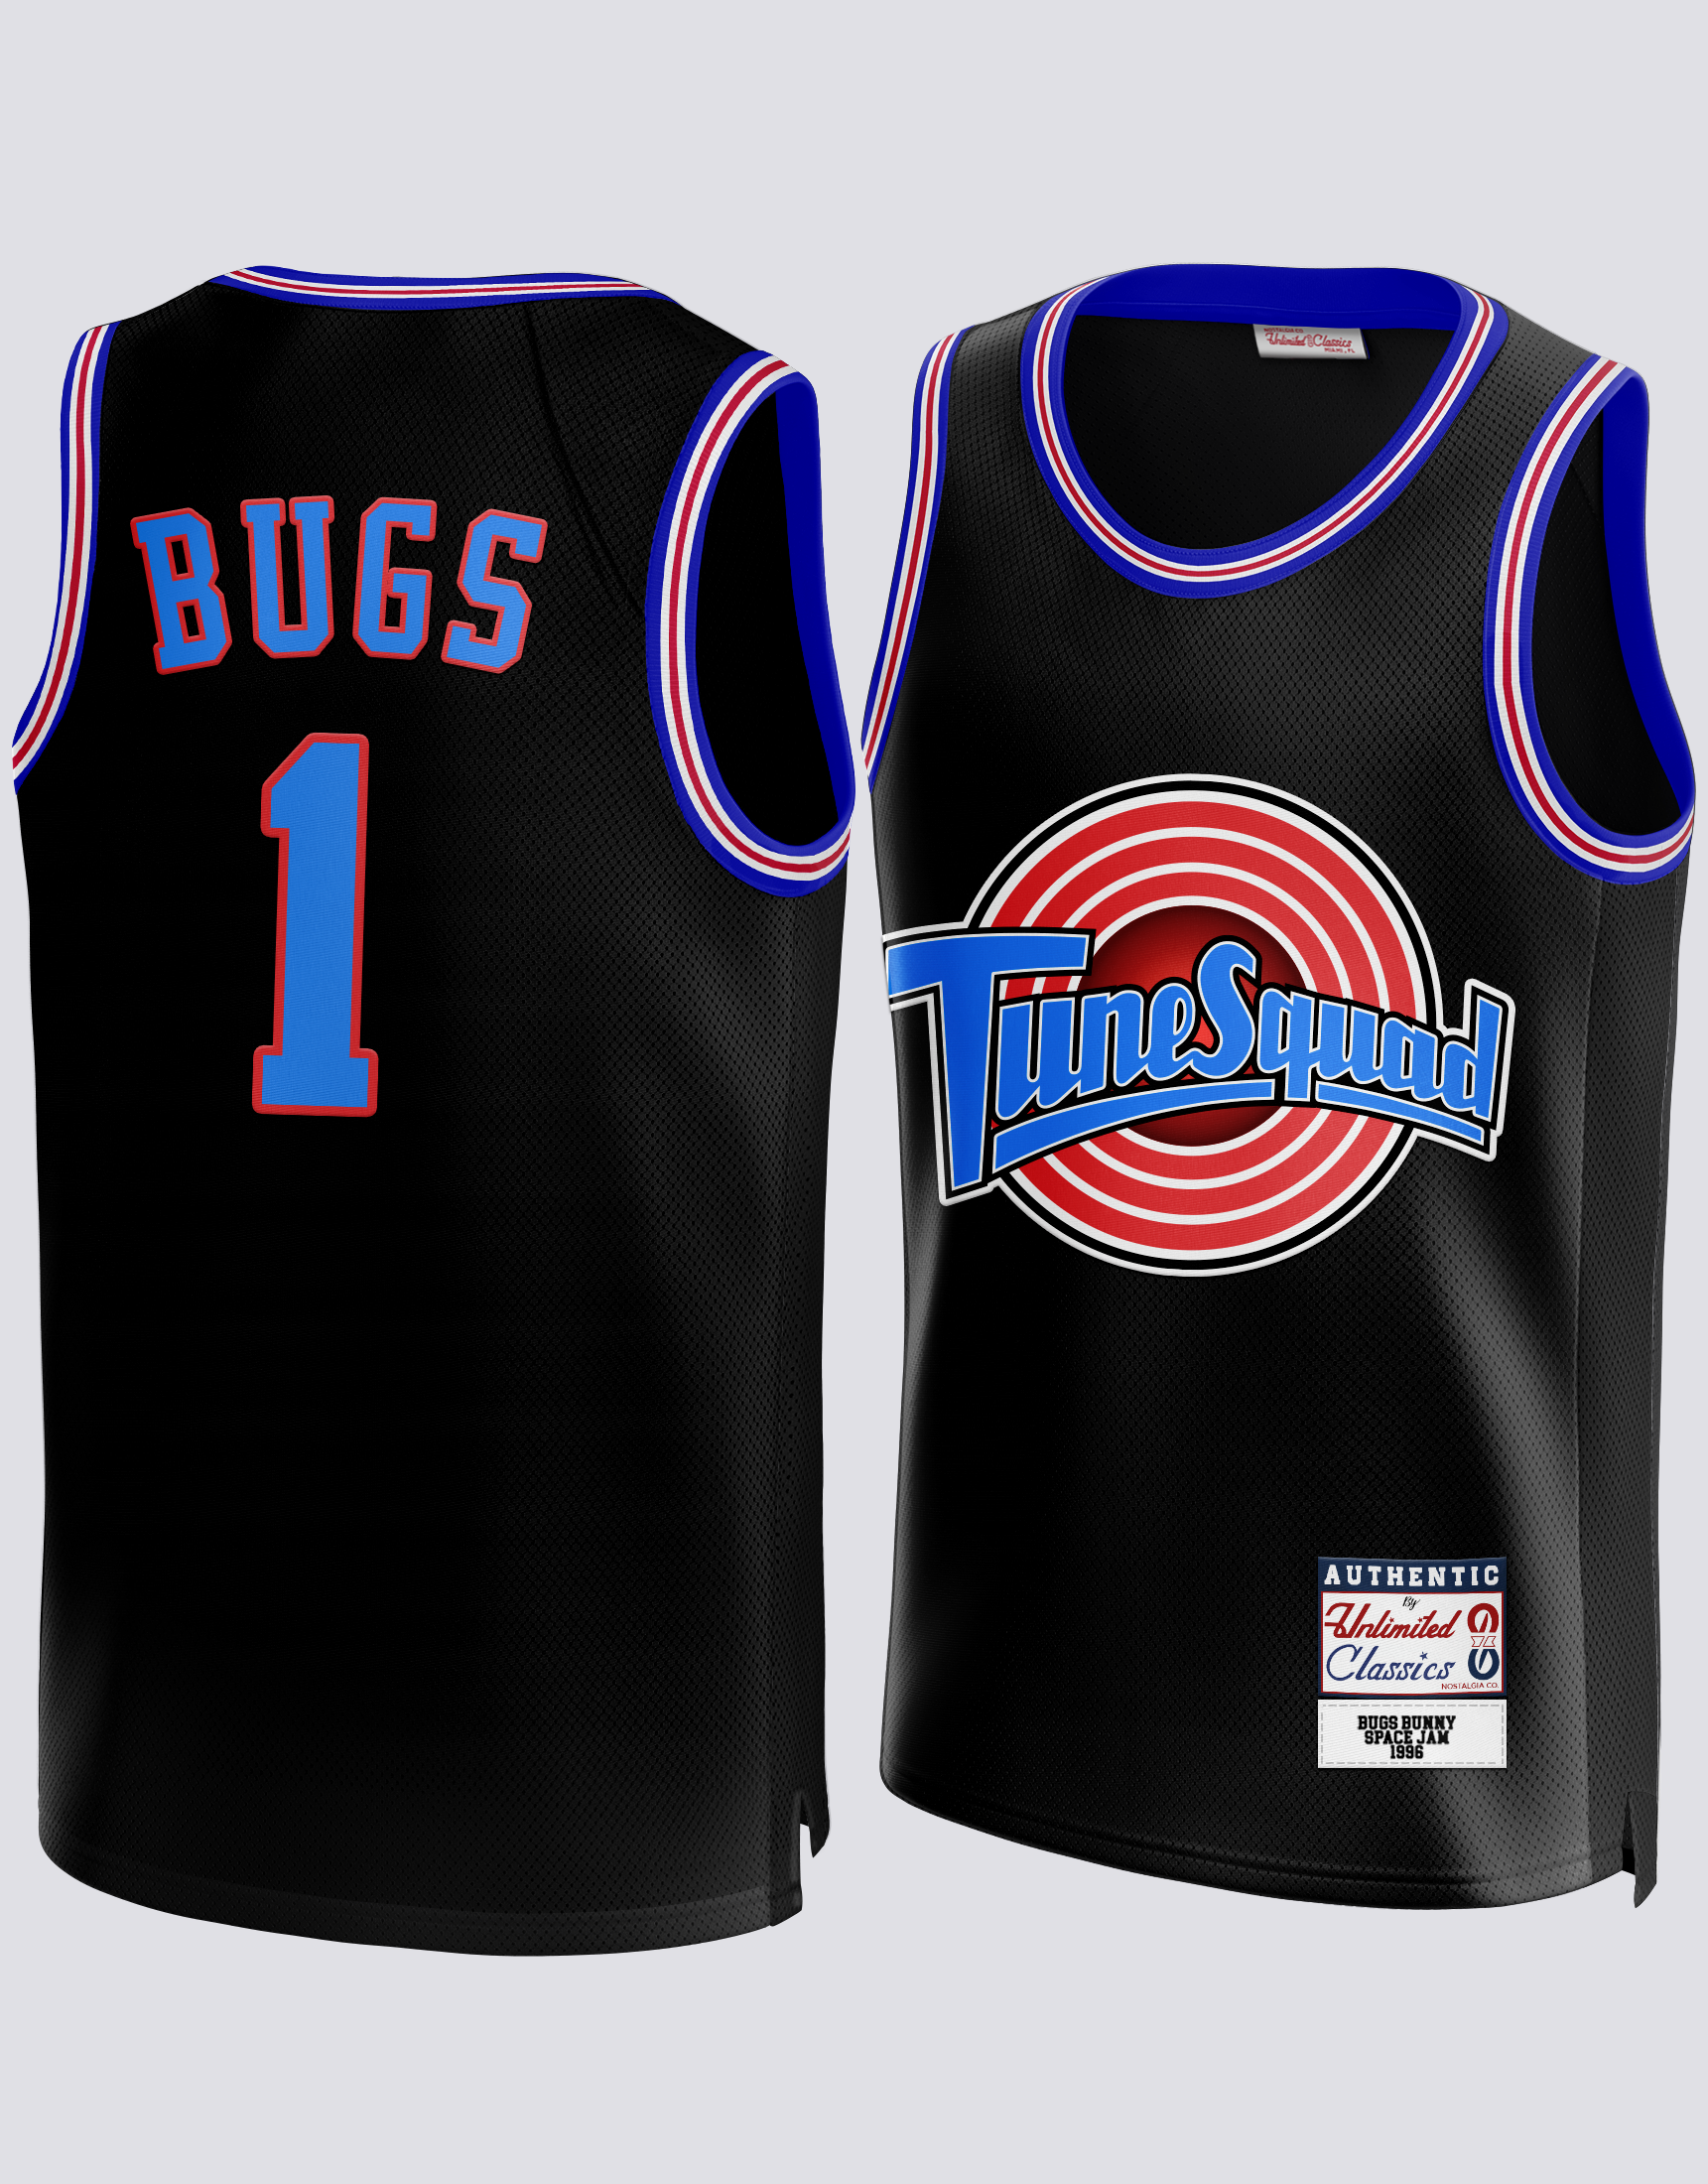 Bugs Bunny #1 Space Jam Tune Squad camiseta de baloncesto negra